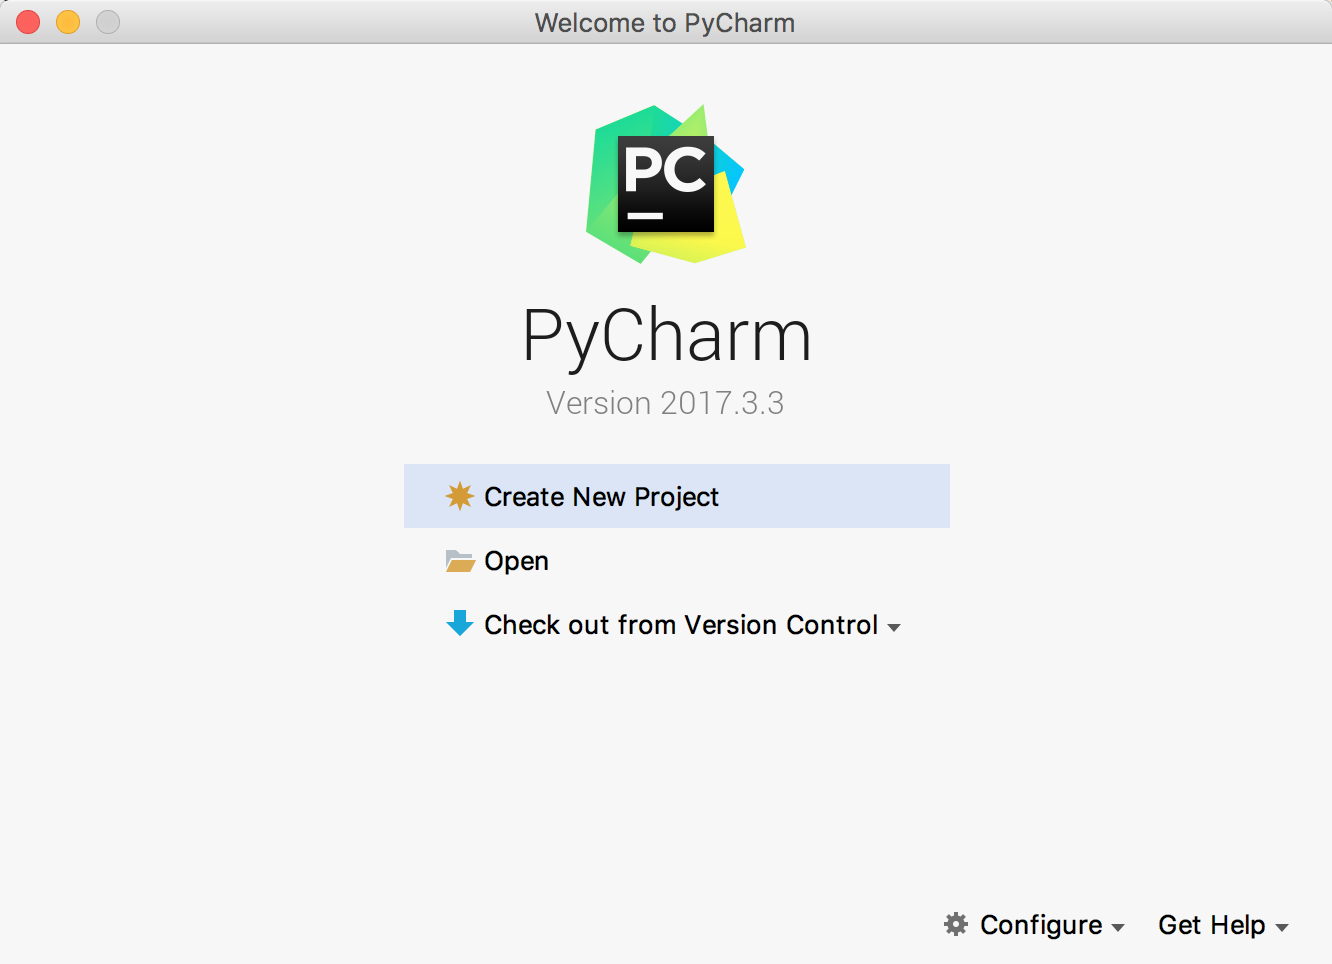 pycharm-welcome.png